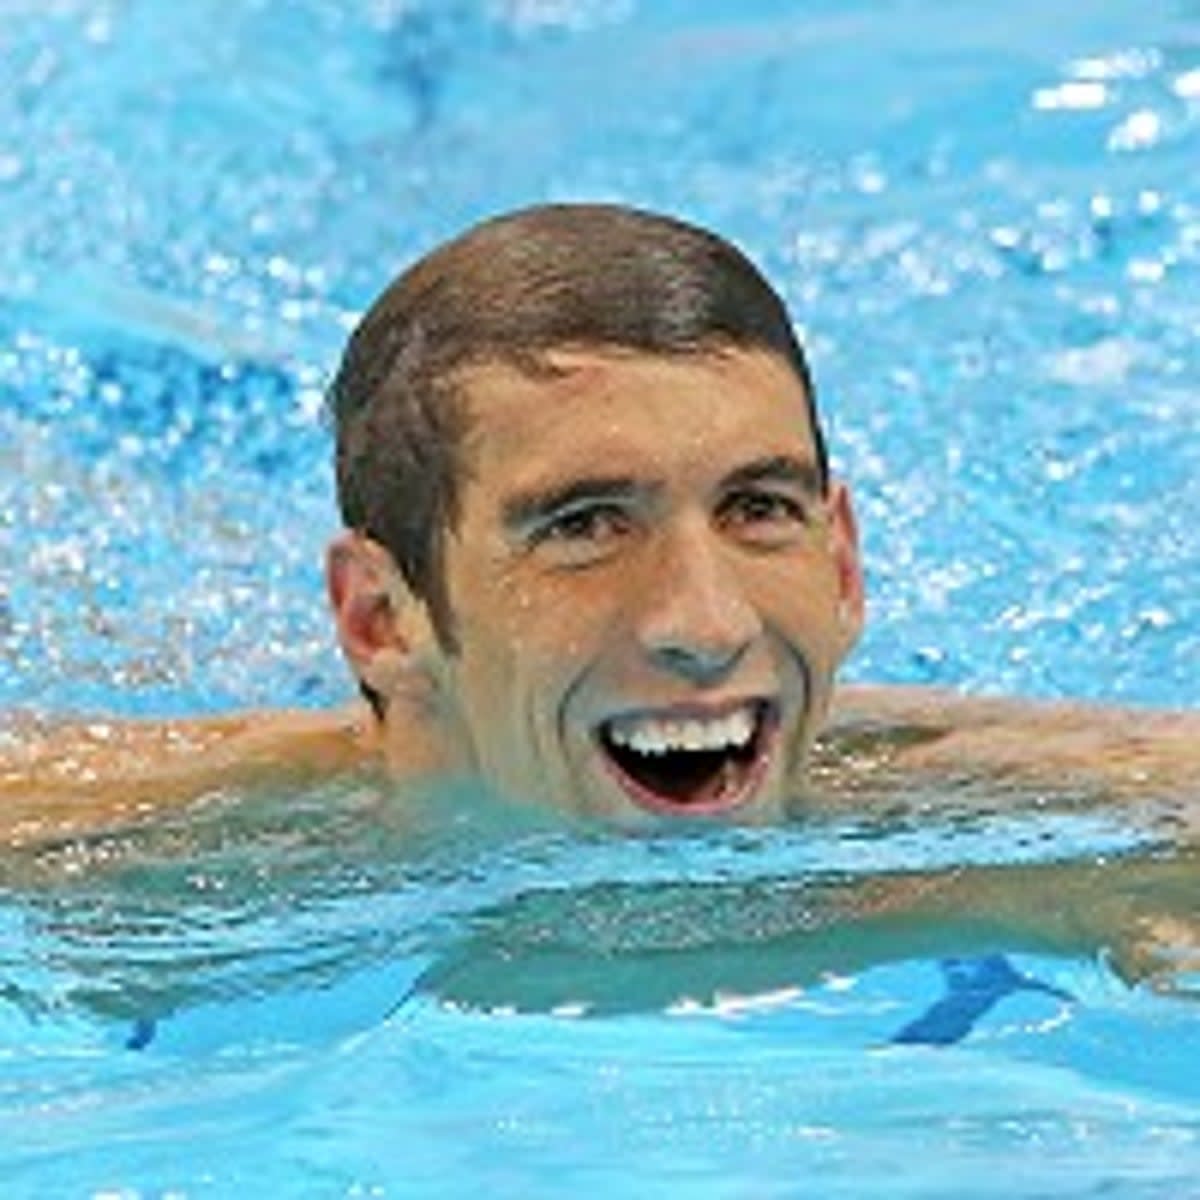 Michael Phelps during his illustrious swimming career